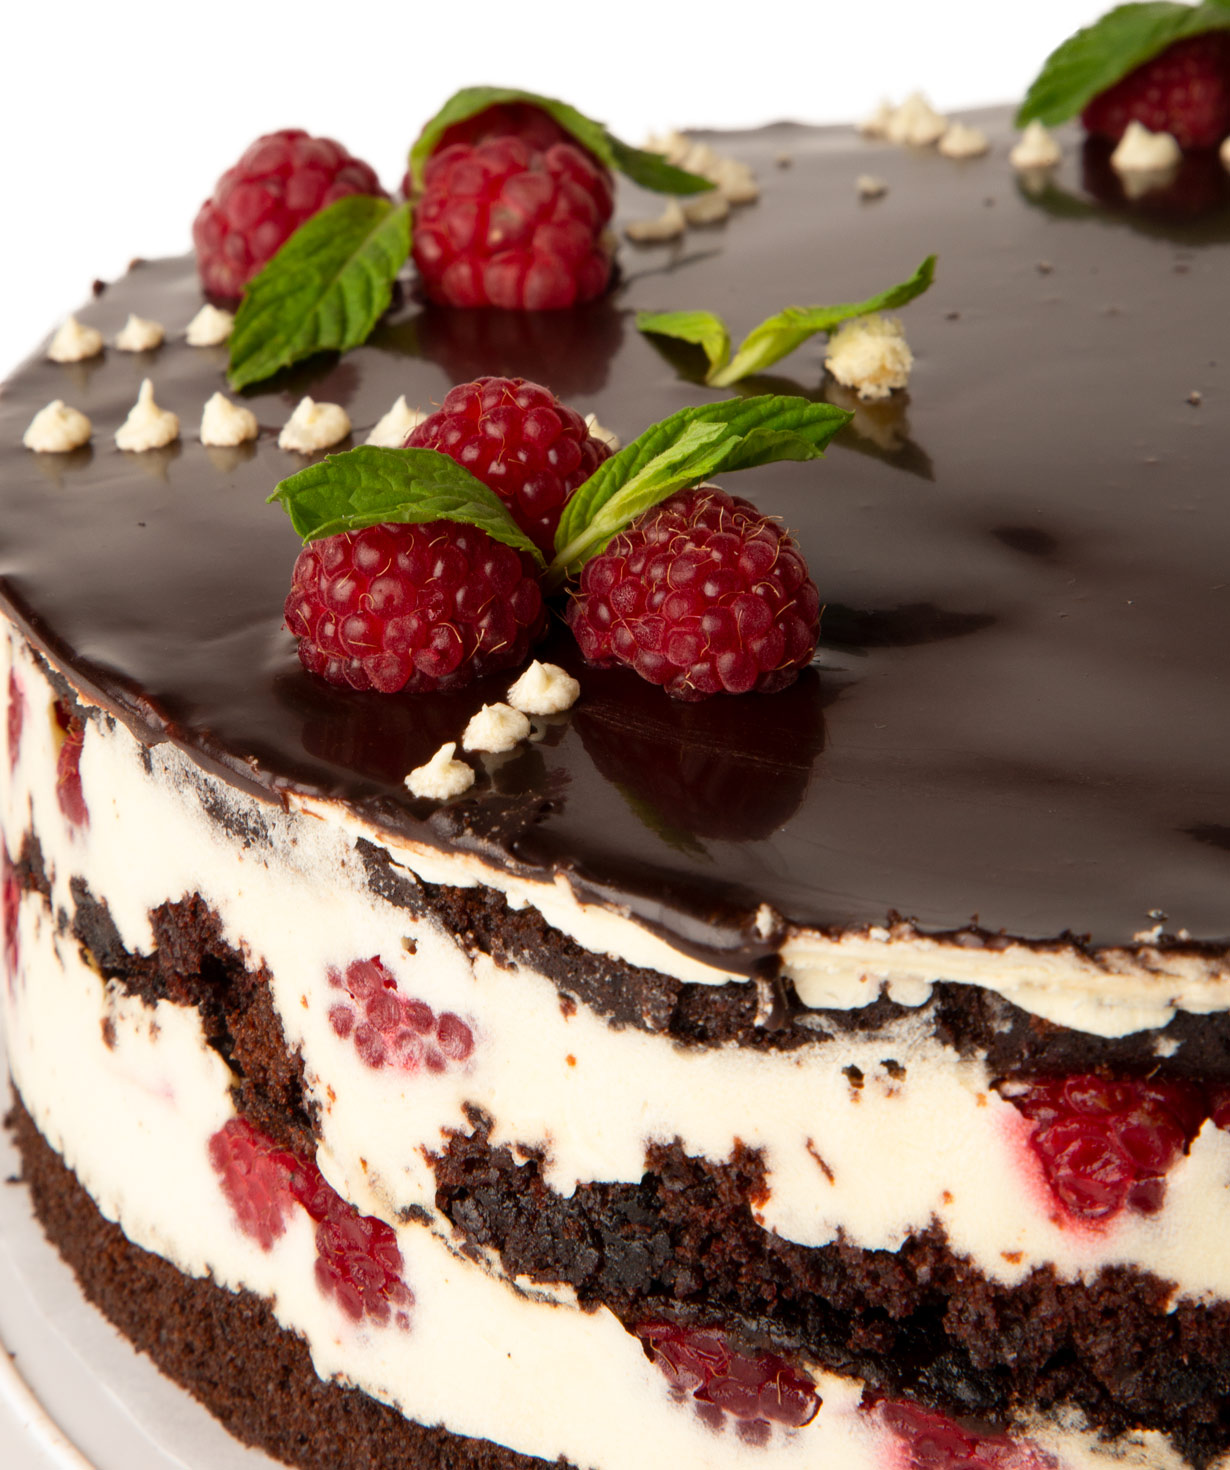 Cake with raspberries